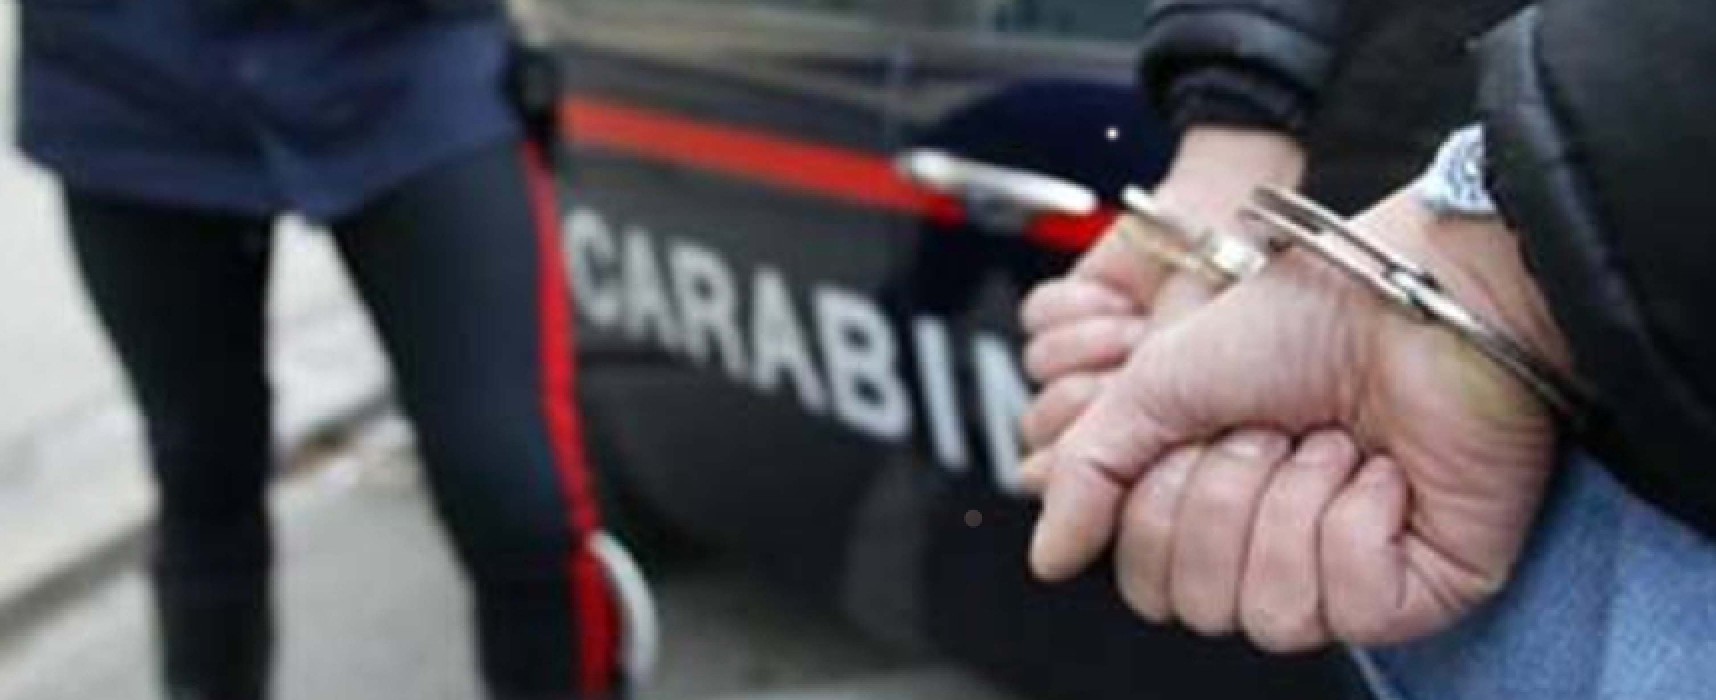 Hashish e marijuana in casa: arrestato 51enne biscegliese